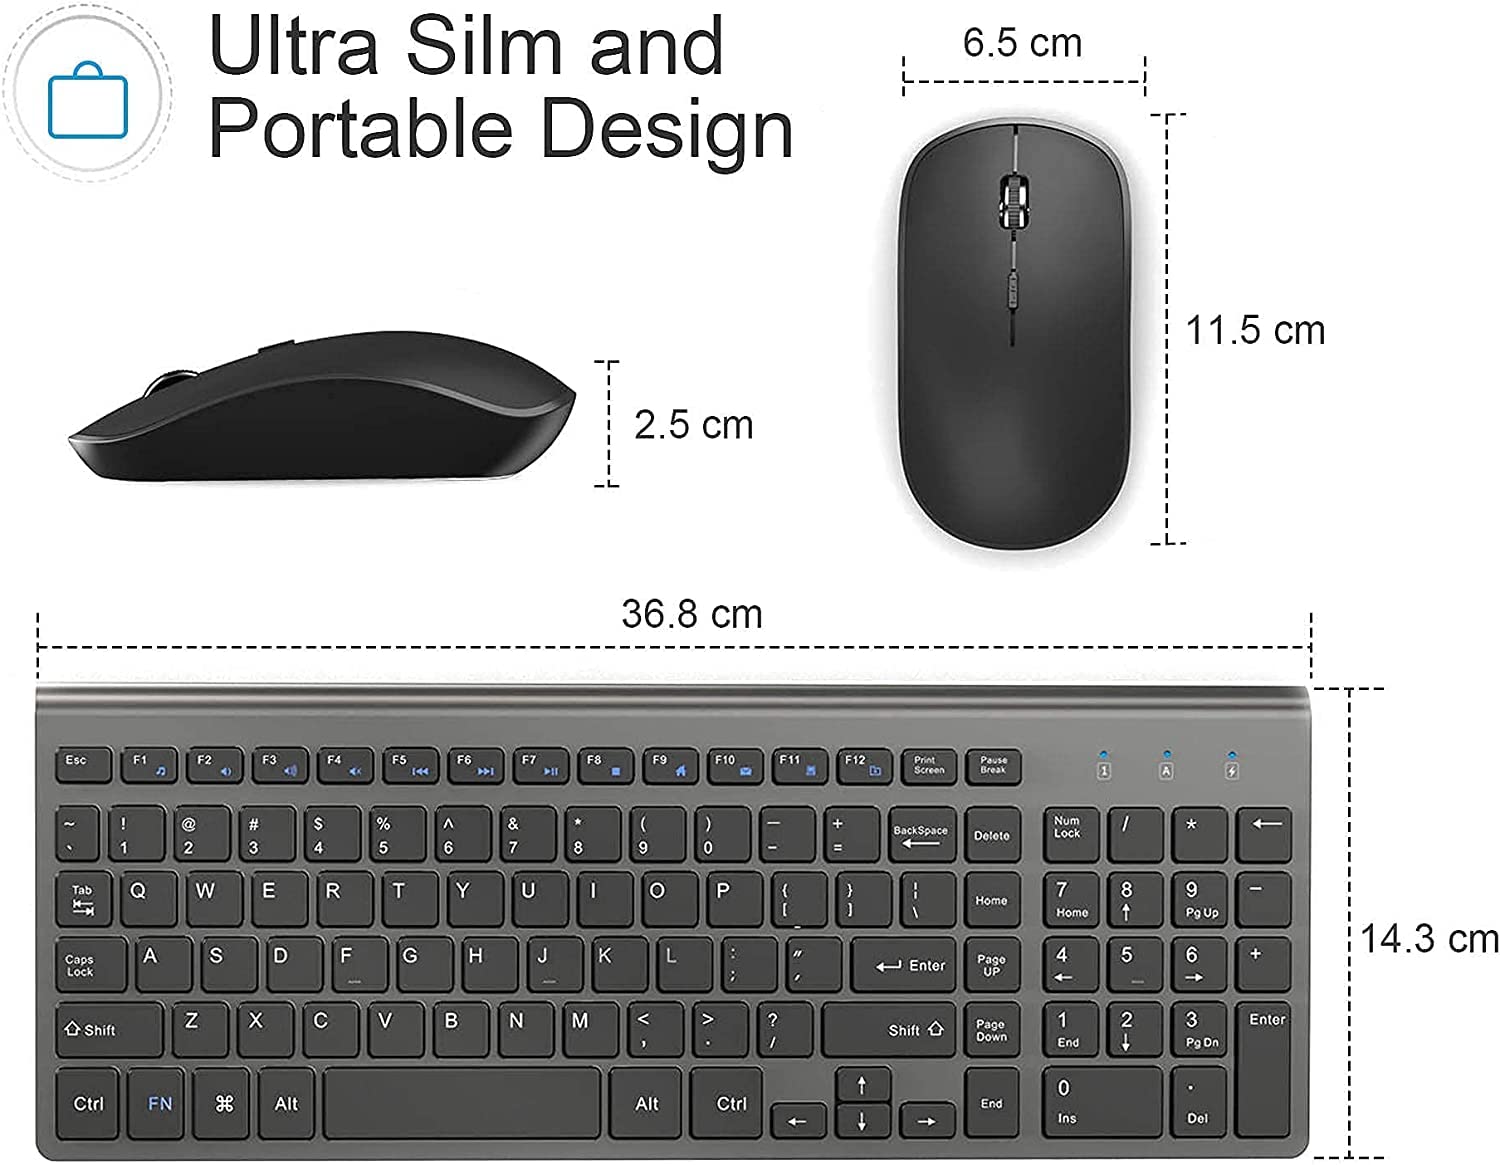 Wireless Keyboard and Mouse,J JOYACCESS 2.4G Ergonomic and Slim Wireless Computer Keyboard Mouse Designed for Windows, PC, Laptop,Tablet - Black Grey